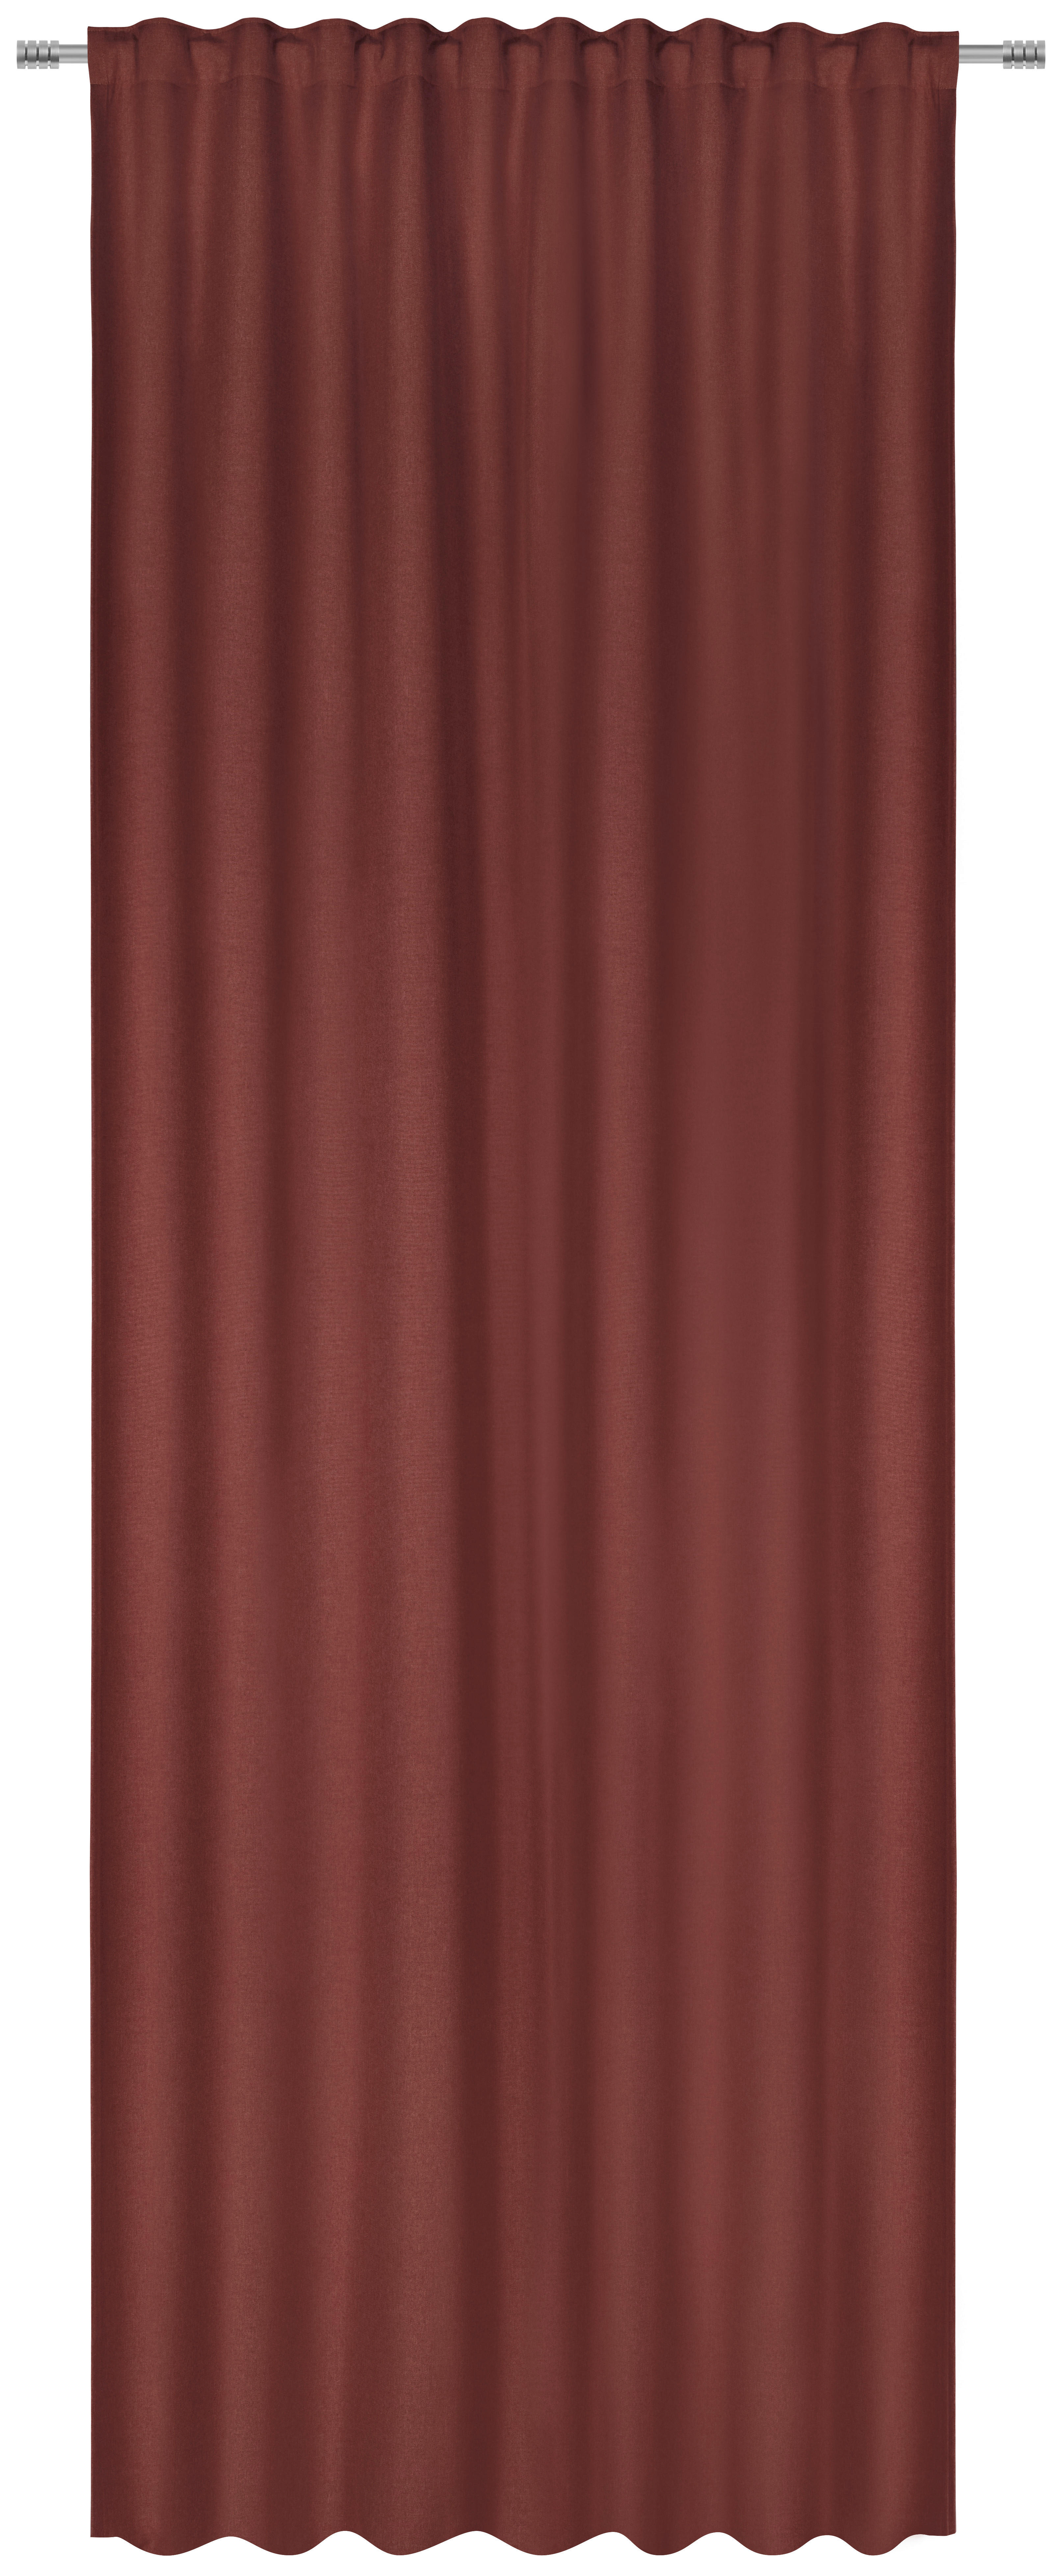 GOTOVA ZAVJESA boje hrđe 140/300 cm   - boje hrđe, Konvencionalno, tekstil (140/300cm) - Esposa